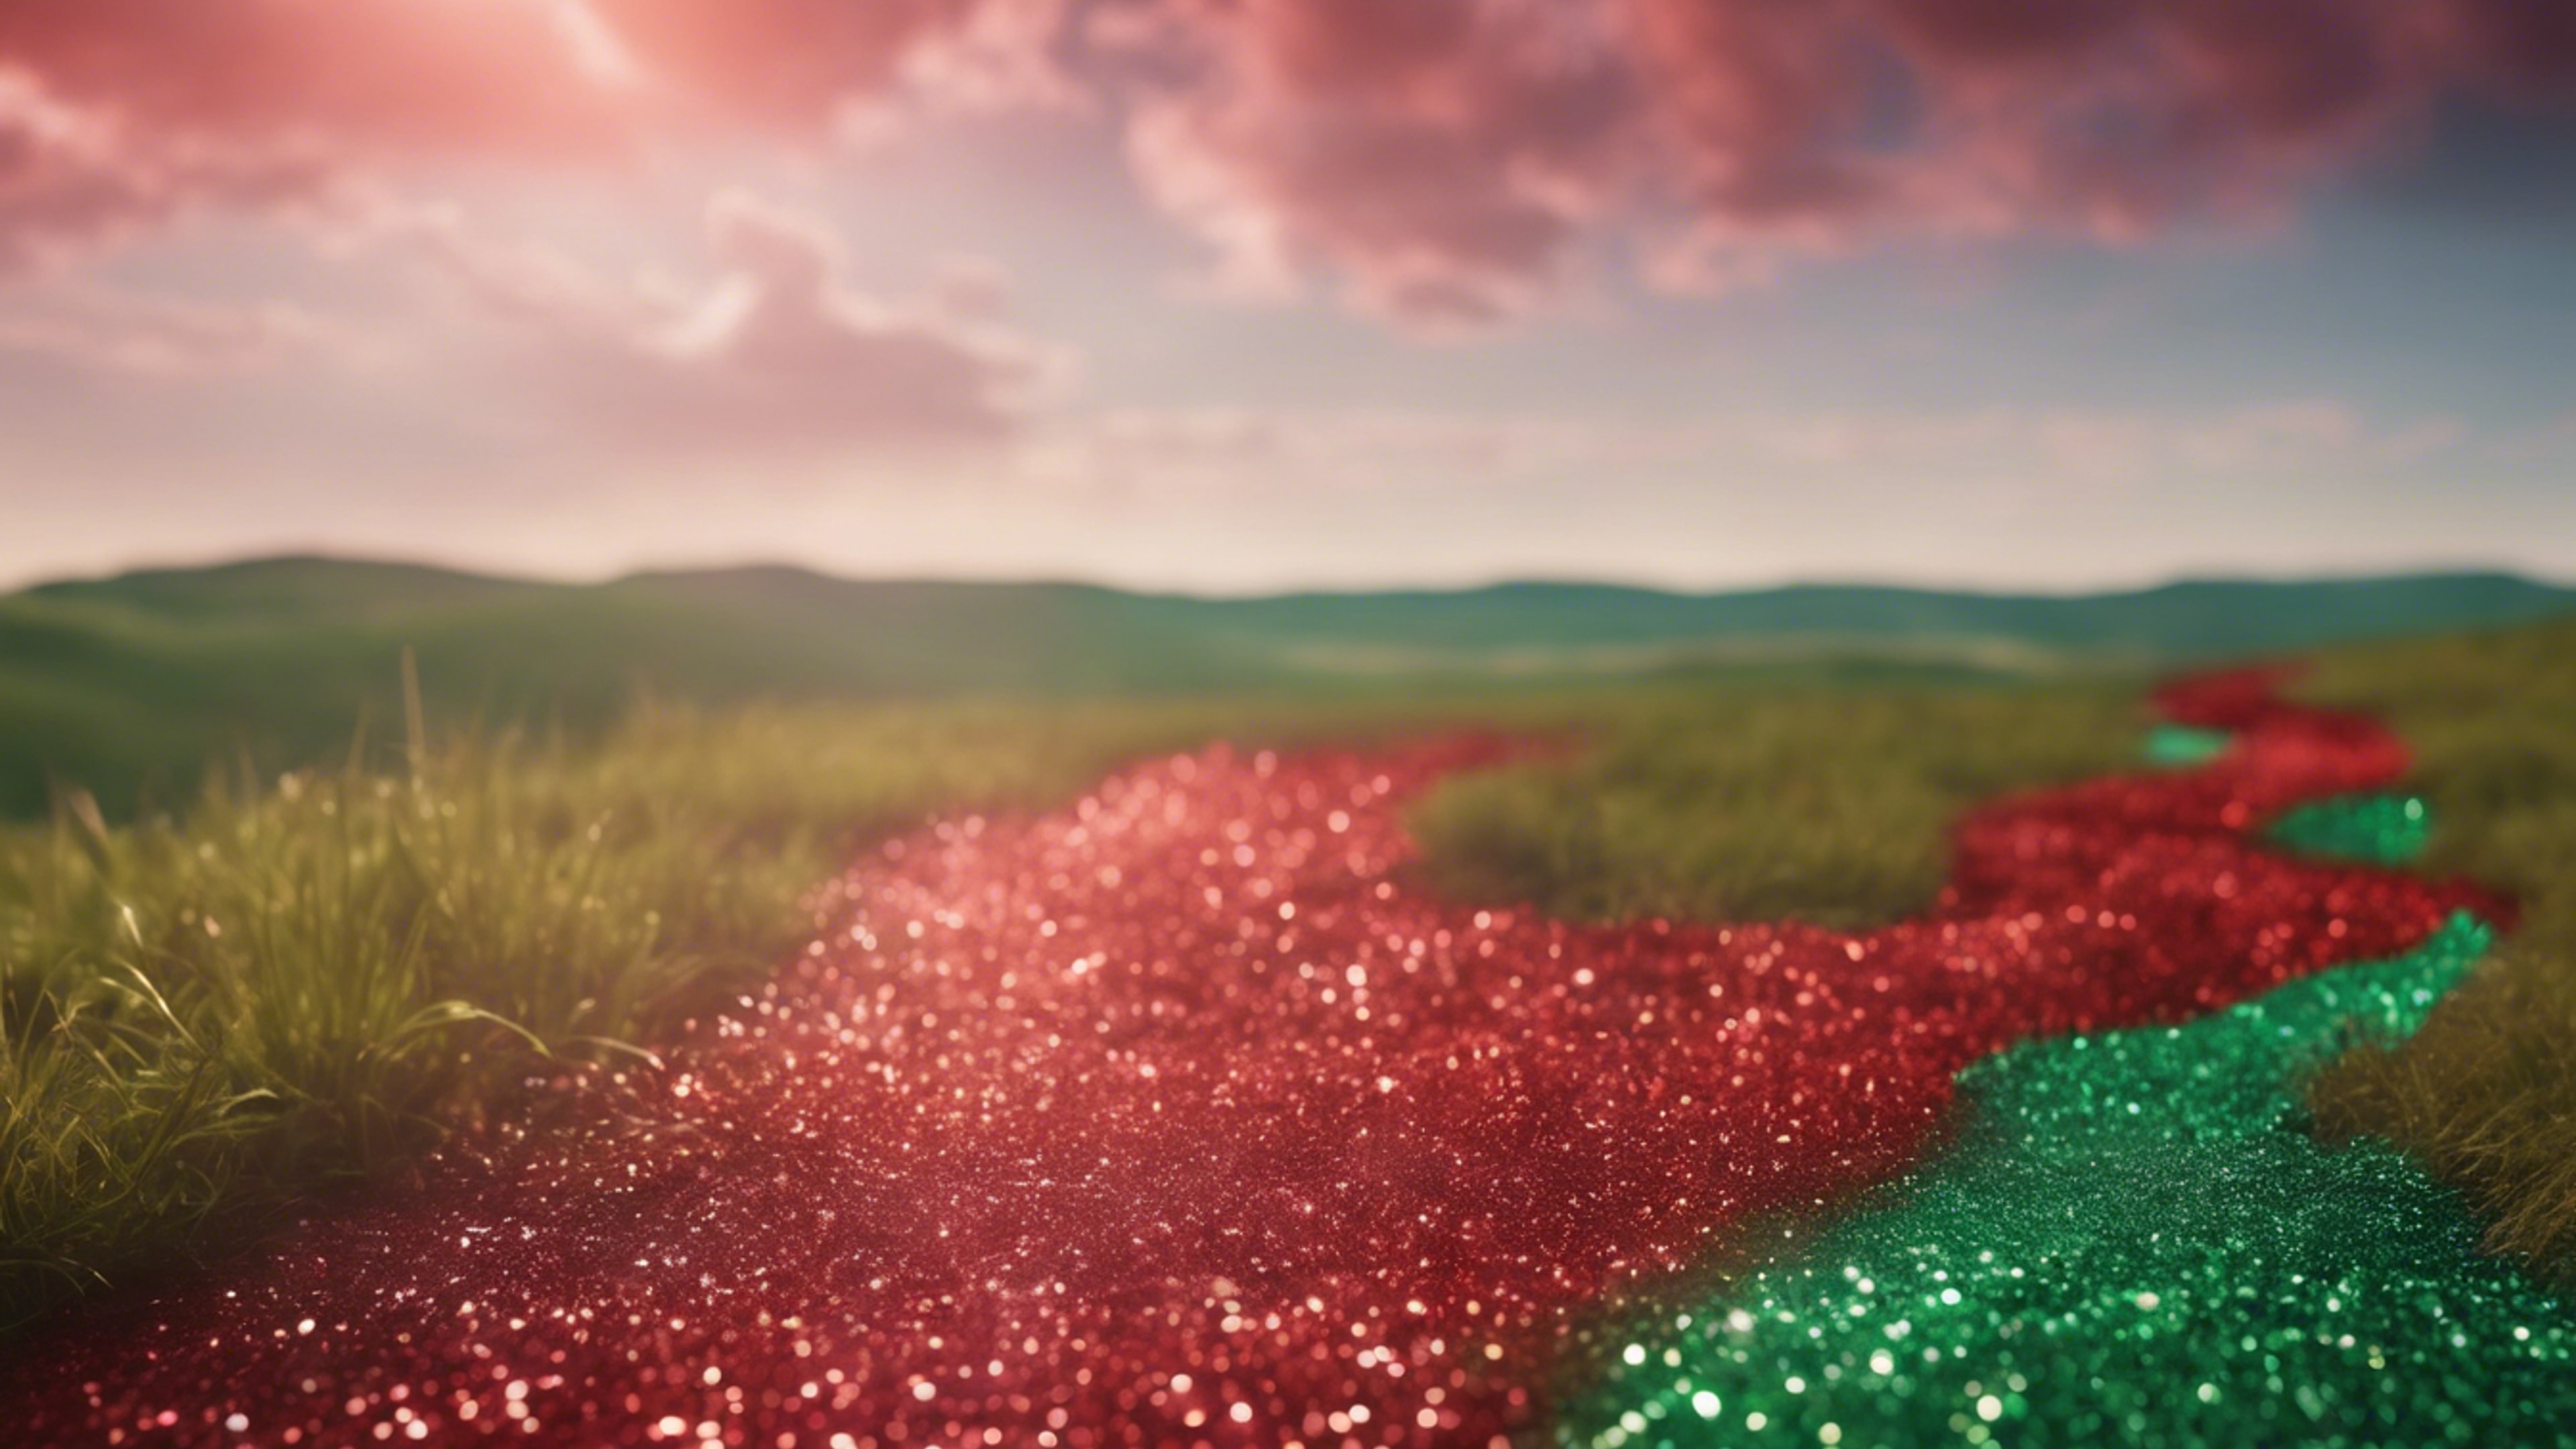 Path of shiny green and red glitter towards the horizon Hintergrund[4b670e6c3f1f43adb6d1]